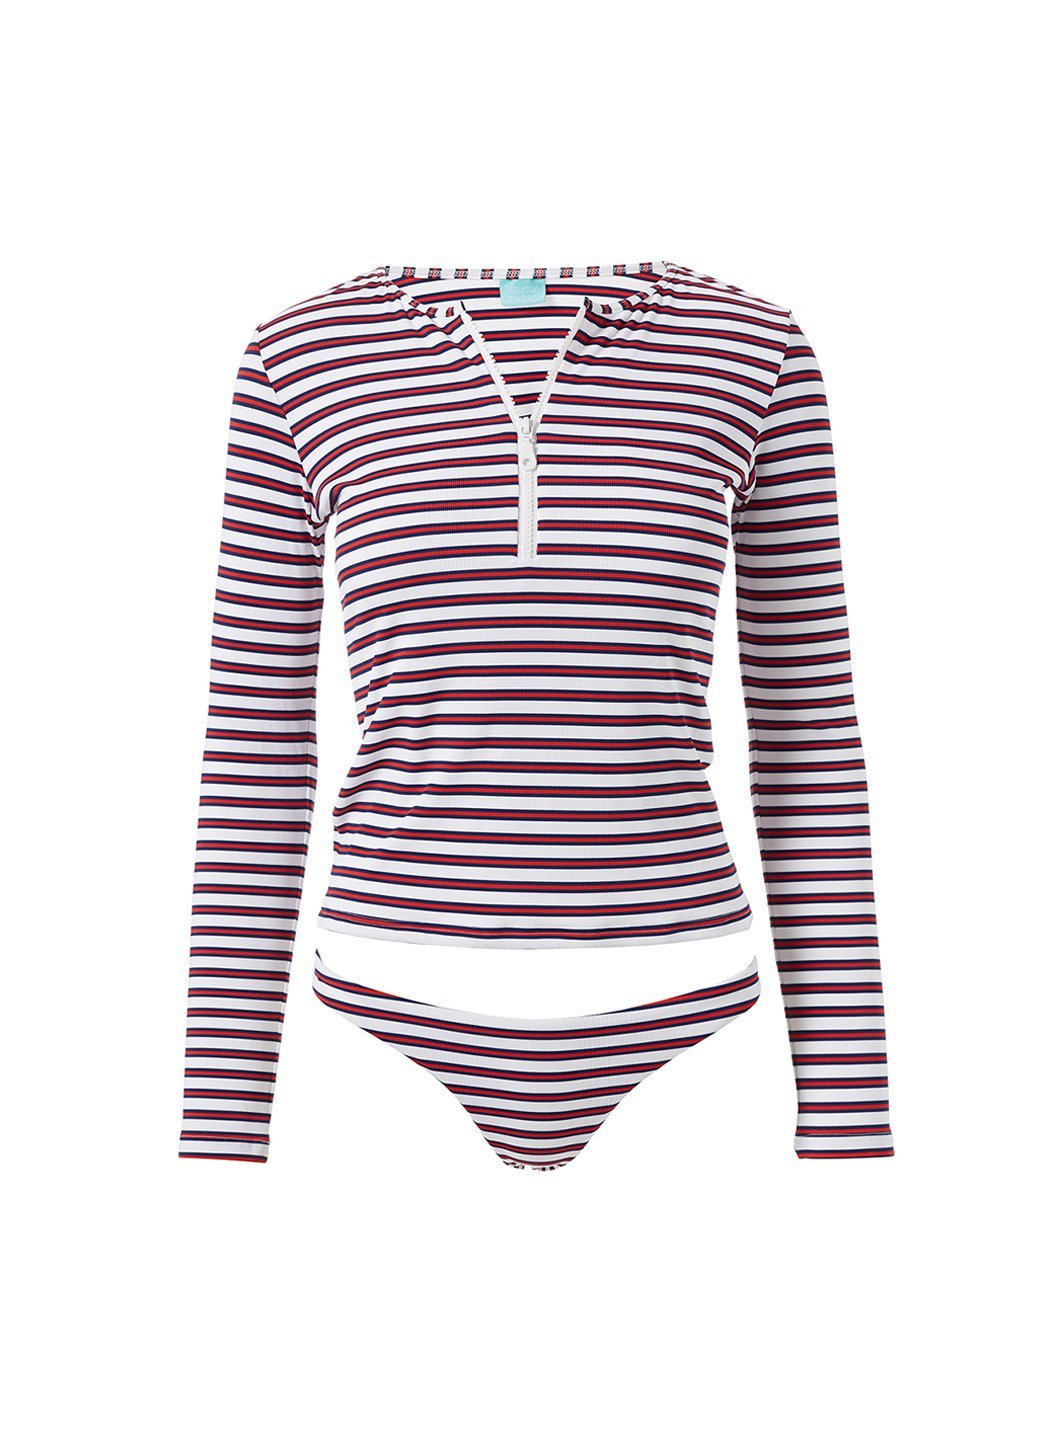 cali-red-nautical-stripe-long-sleeve-bikini_162559c1-8aff-447e-b3ec-a551e428be0e